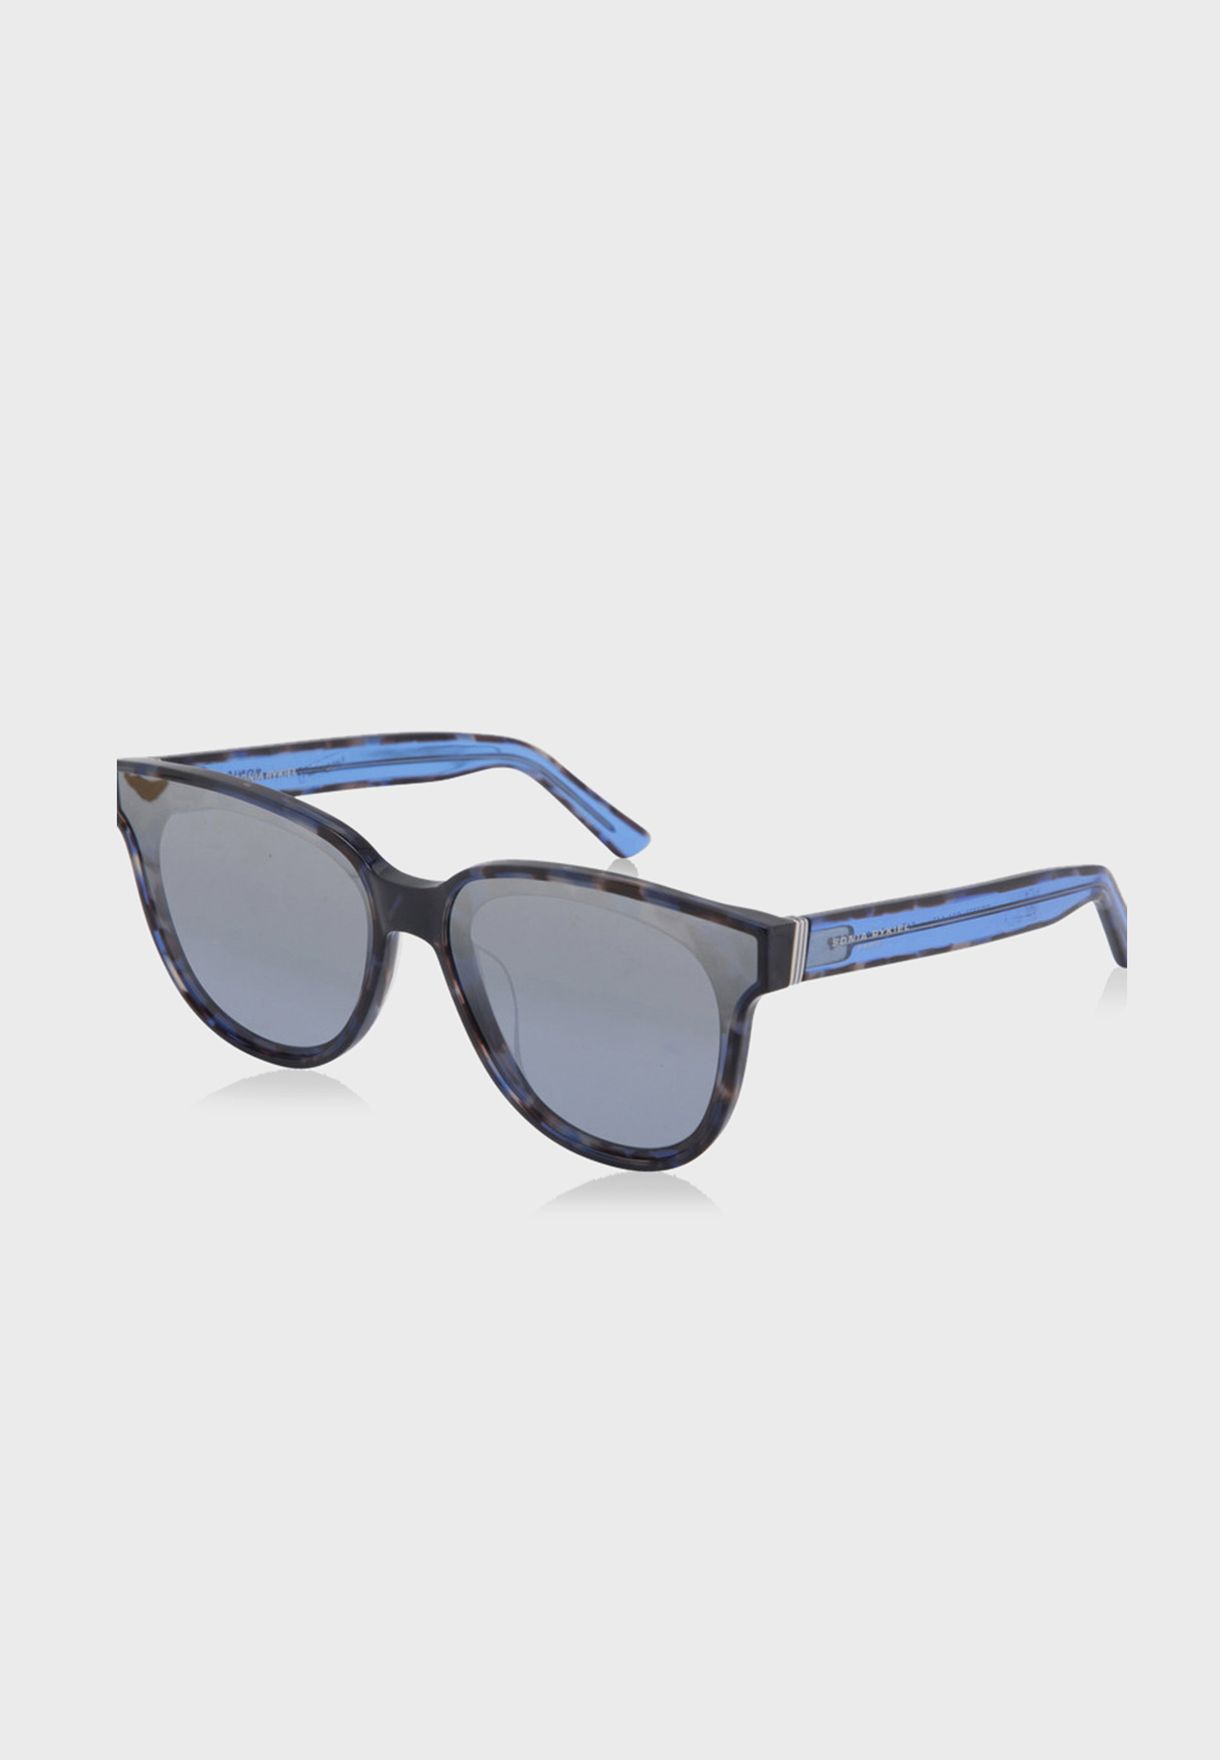 L SR777301 Cateye Sunglasses